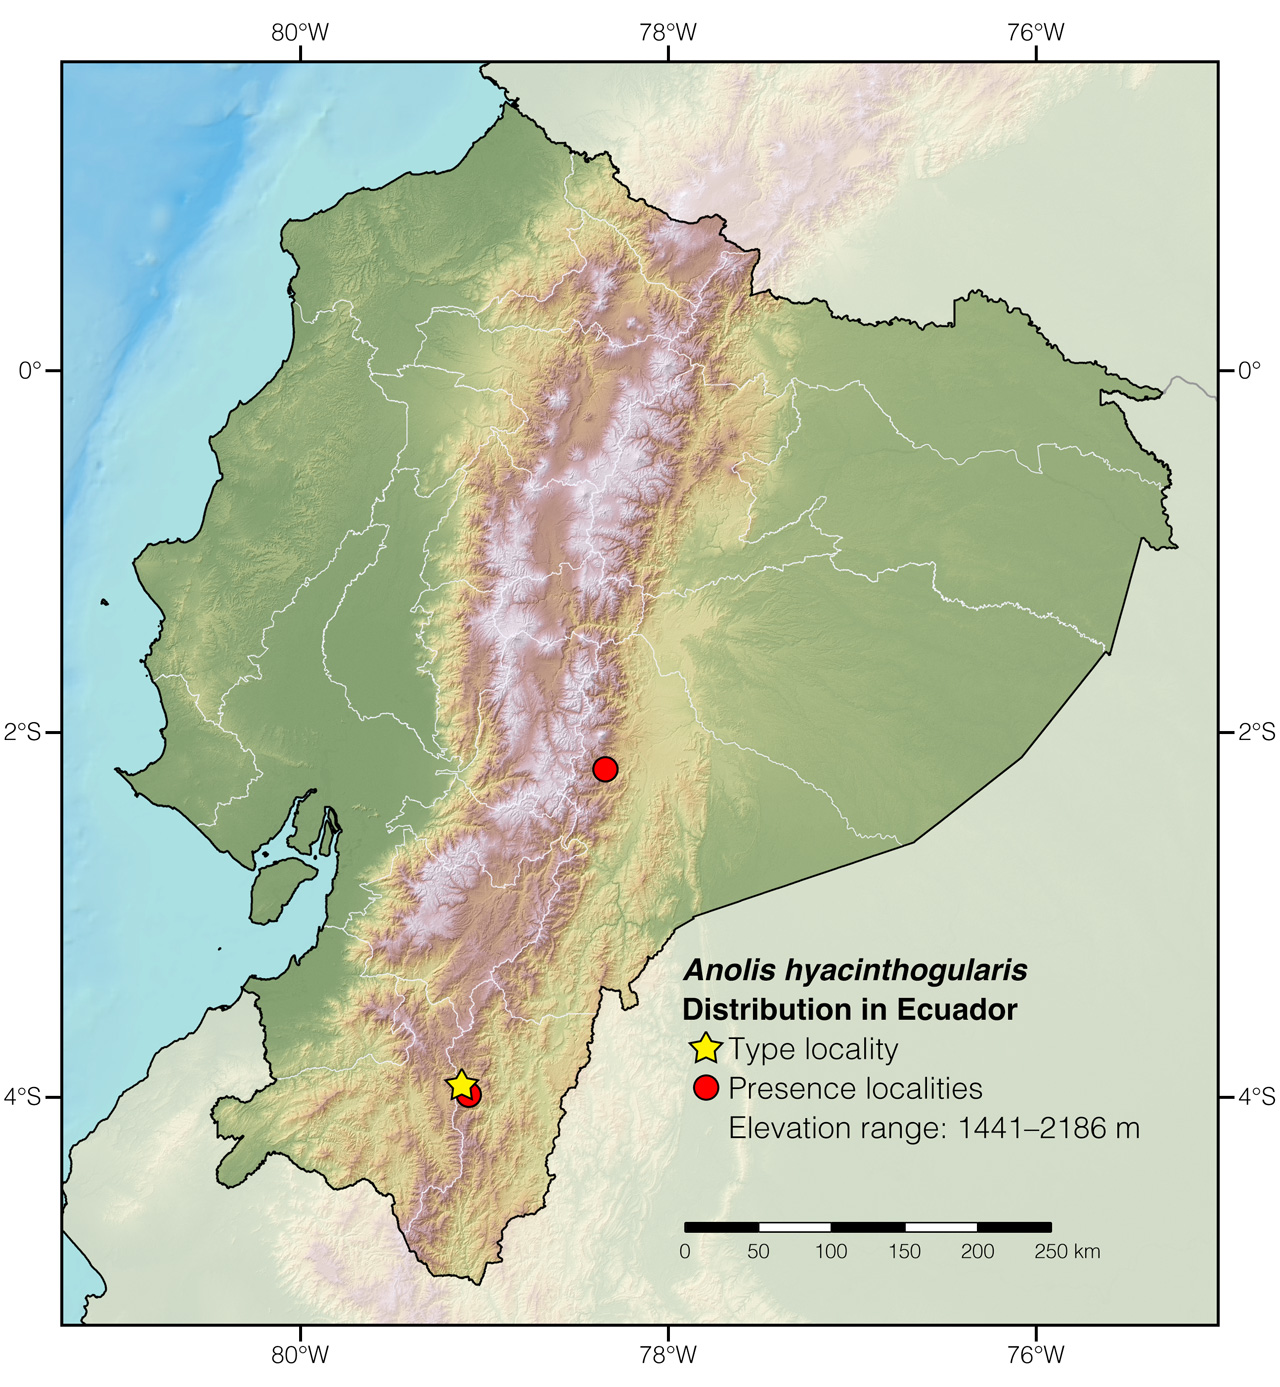 Distribution of Anolis hyacinthogularis in Ecuador